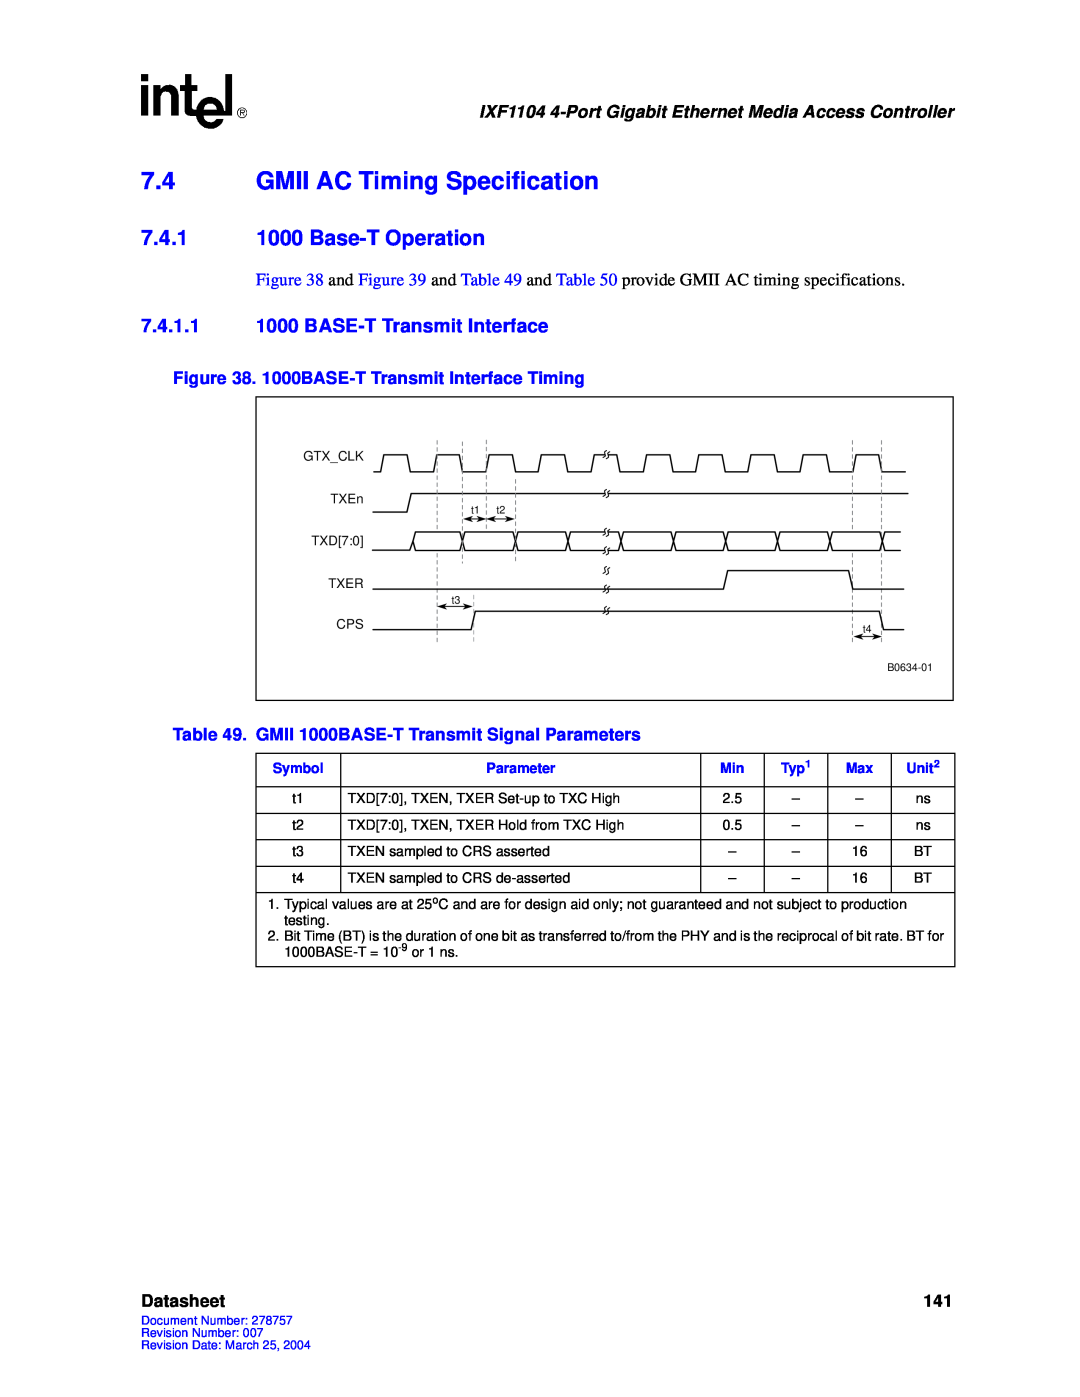 Intel IXF1104 manual 7.4GMII AC Timing Specification, Base-TOperation, BASE-TTransmit Interface, Datasheet 